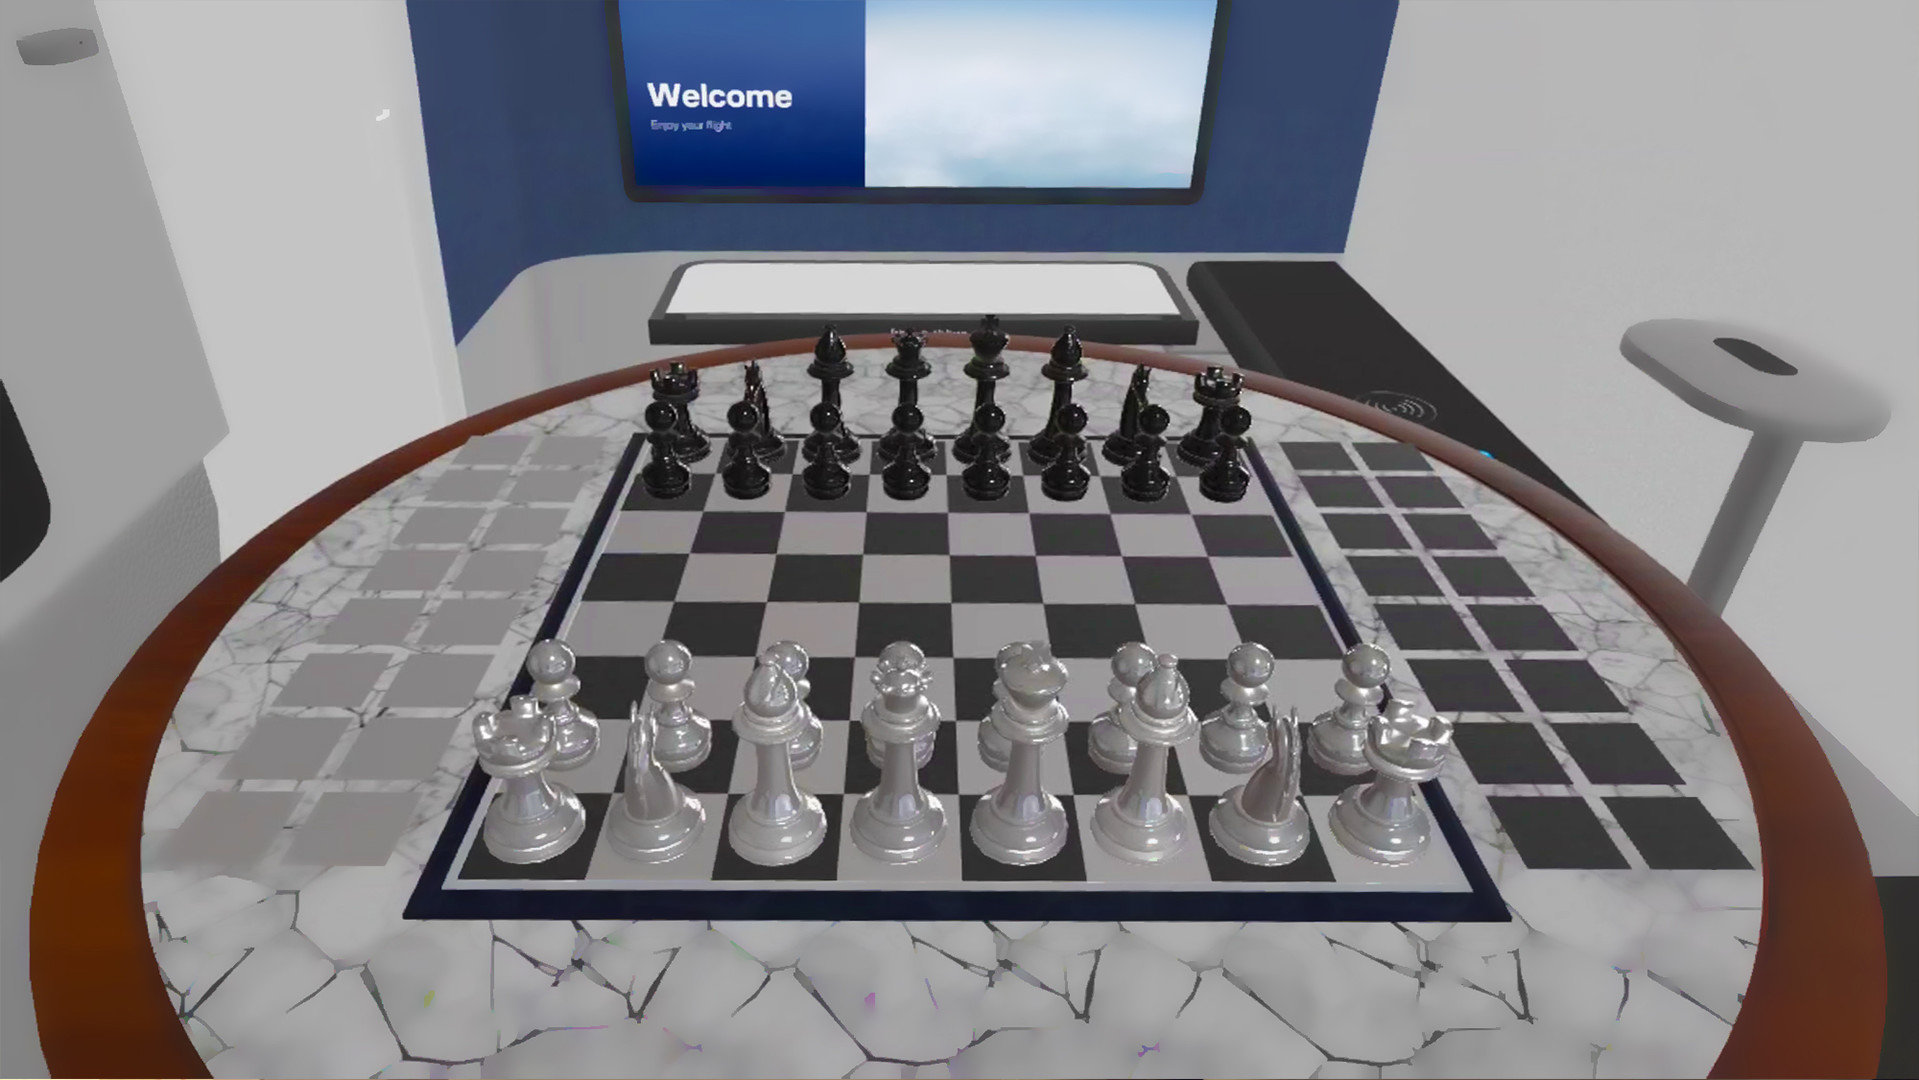 Lufthansa Chess in travel mode